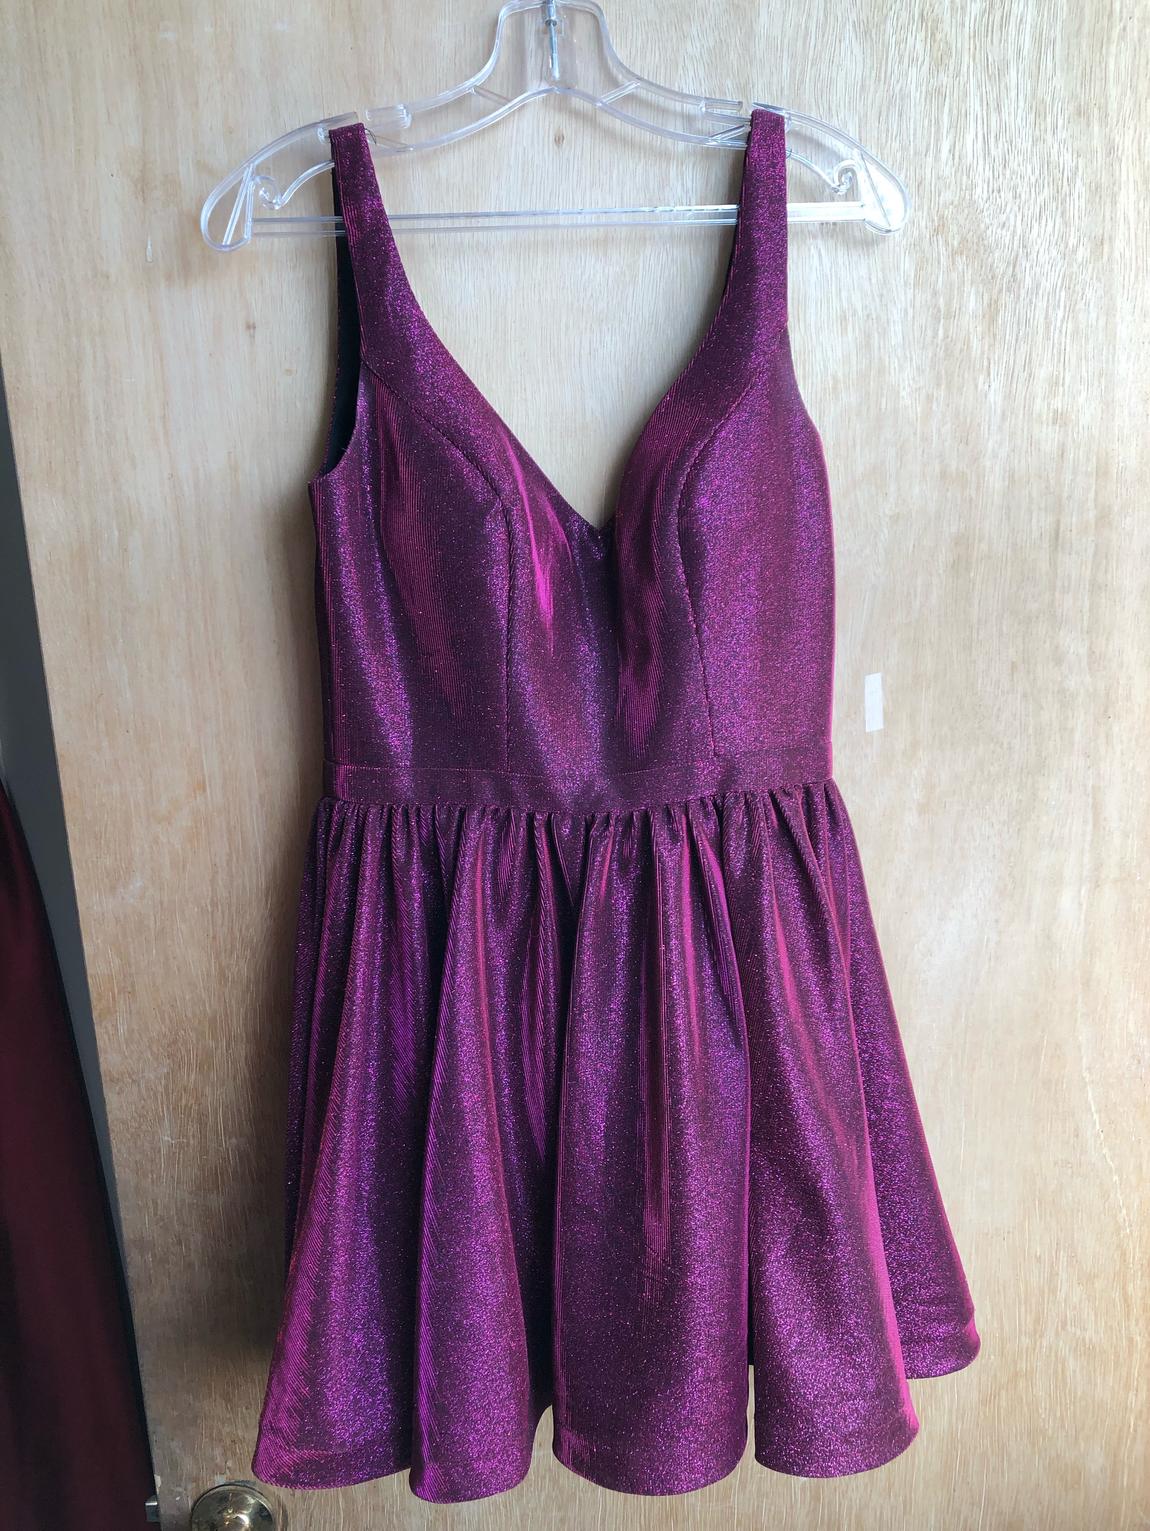 Ellie Wilde Size 4 Purple Cocktail Dress on Queenly